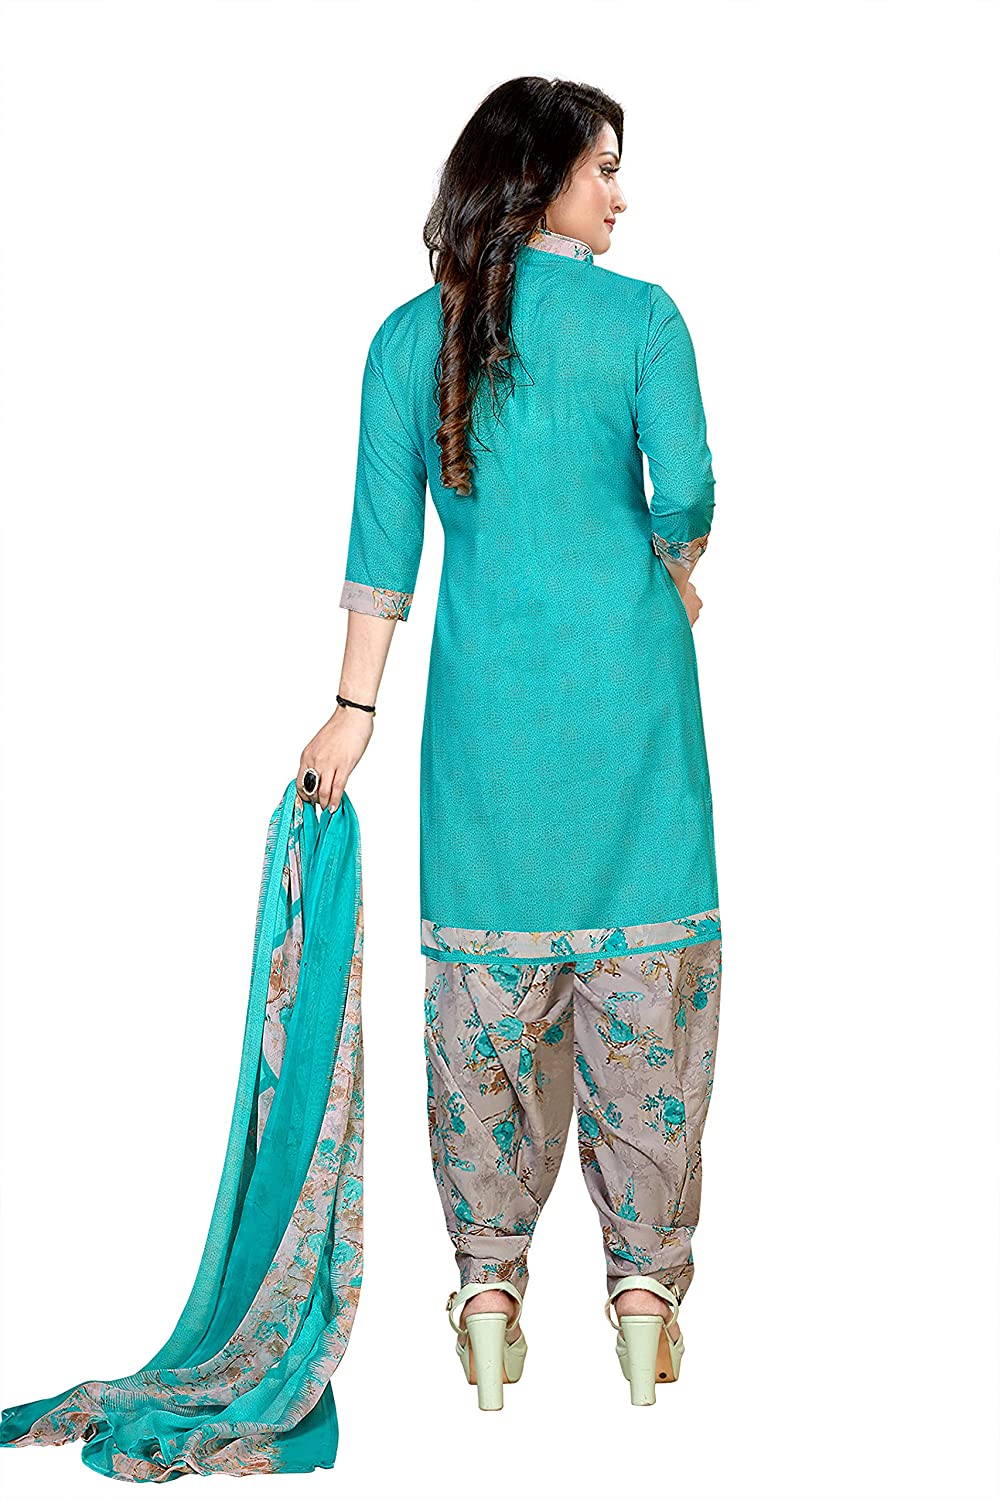 Women Crepe Un-Stitched Salwar Suit Material Free Size